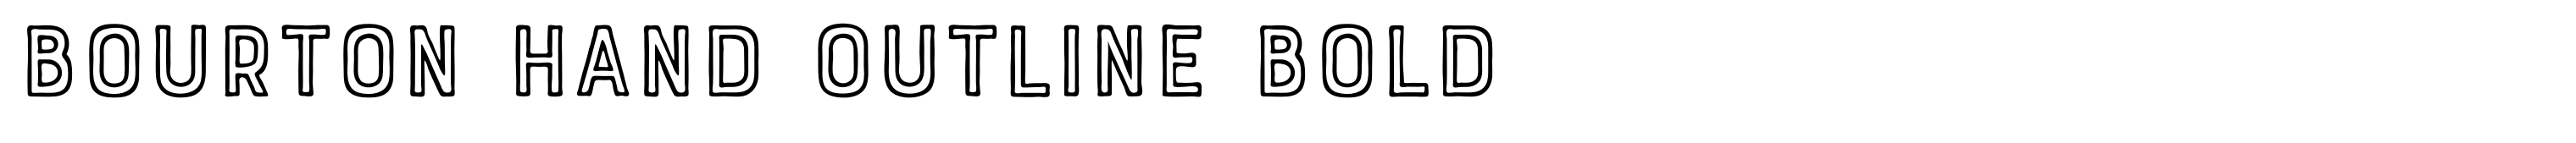 Bourton Hand Outline Bold